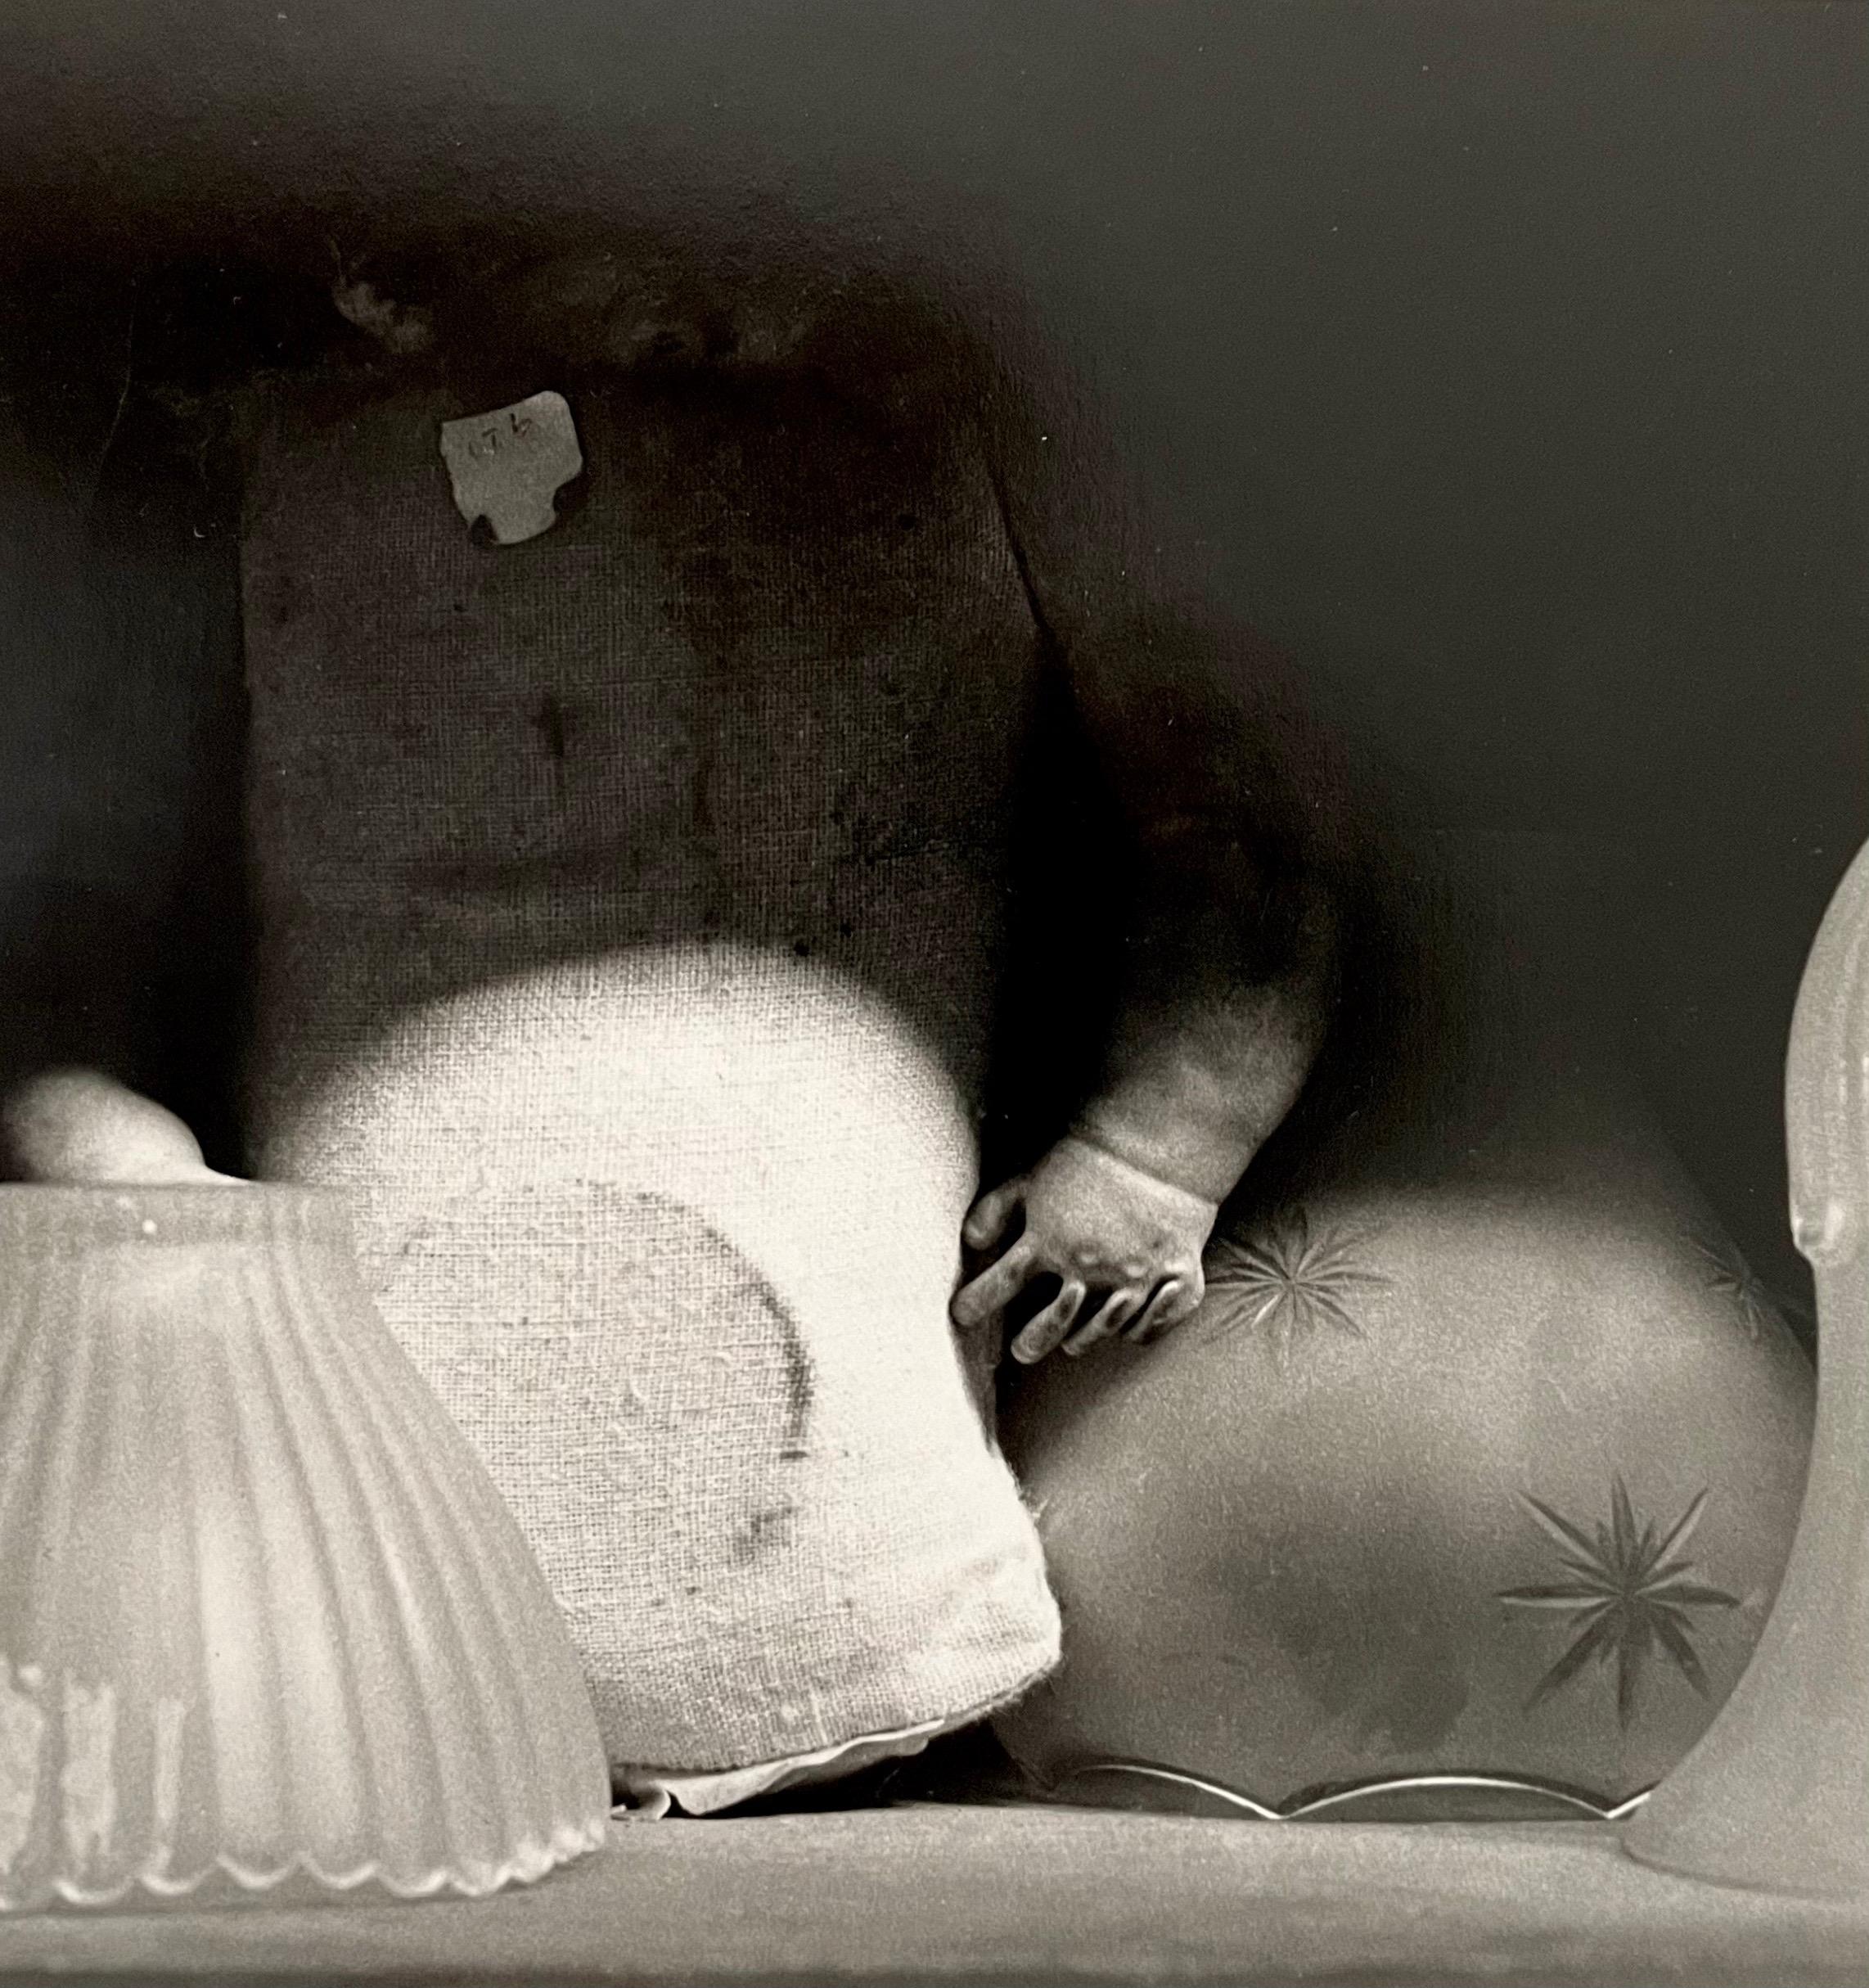 Vintage Silver Gelatin Photograph Surrealist Doll Art Photo, Jazz Photographer 